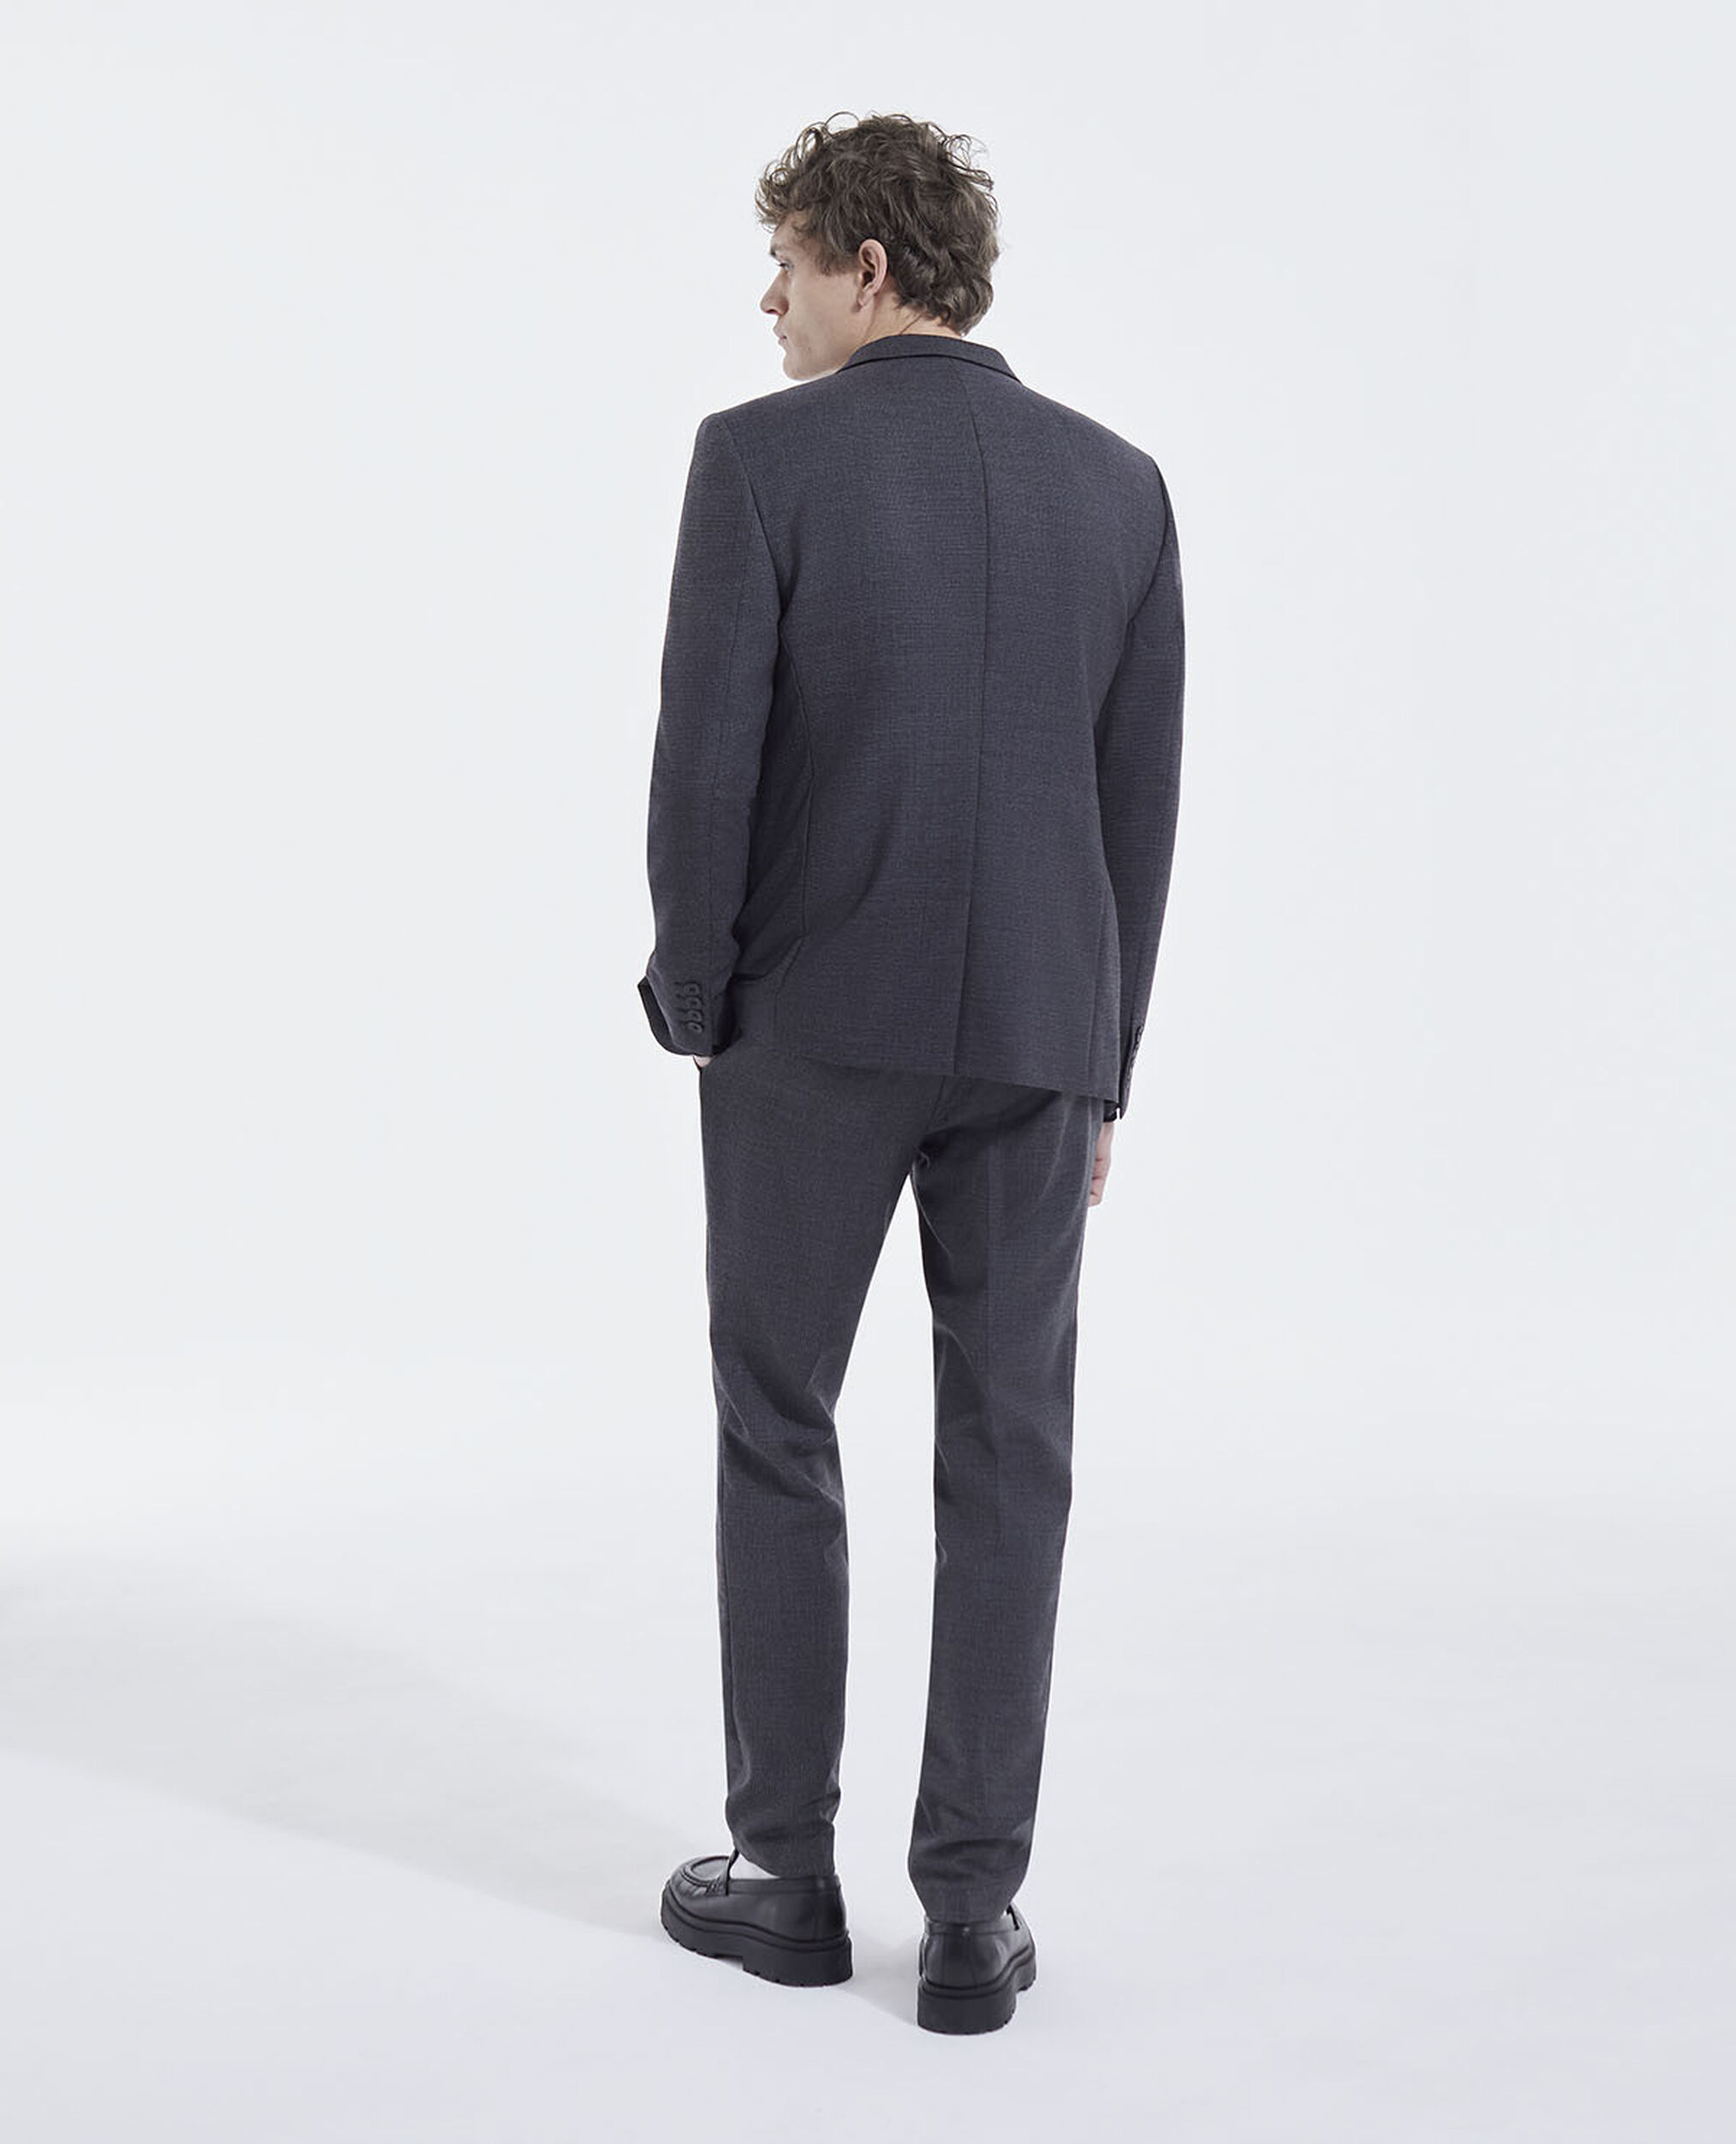 Black and gray printed suit pants, DARK GREY, hi-res image number null